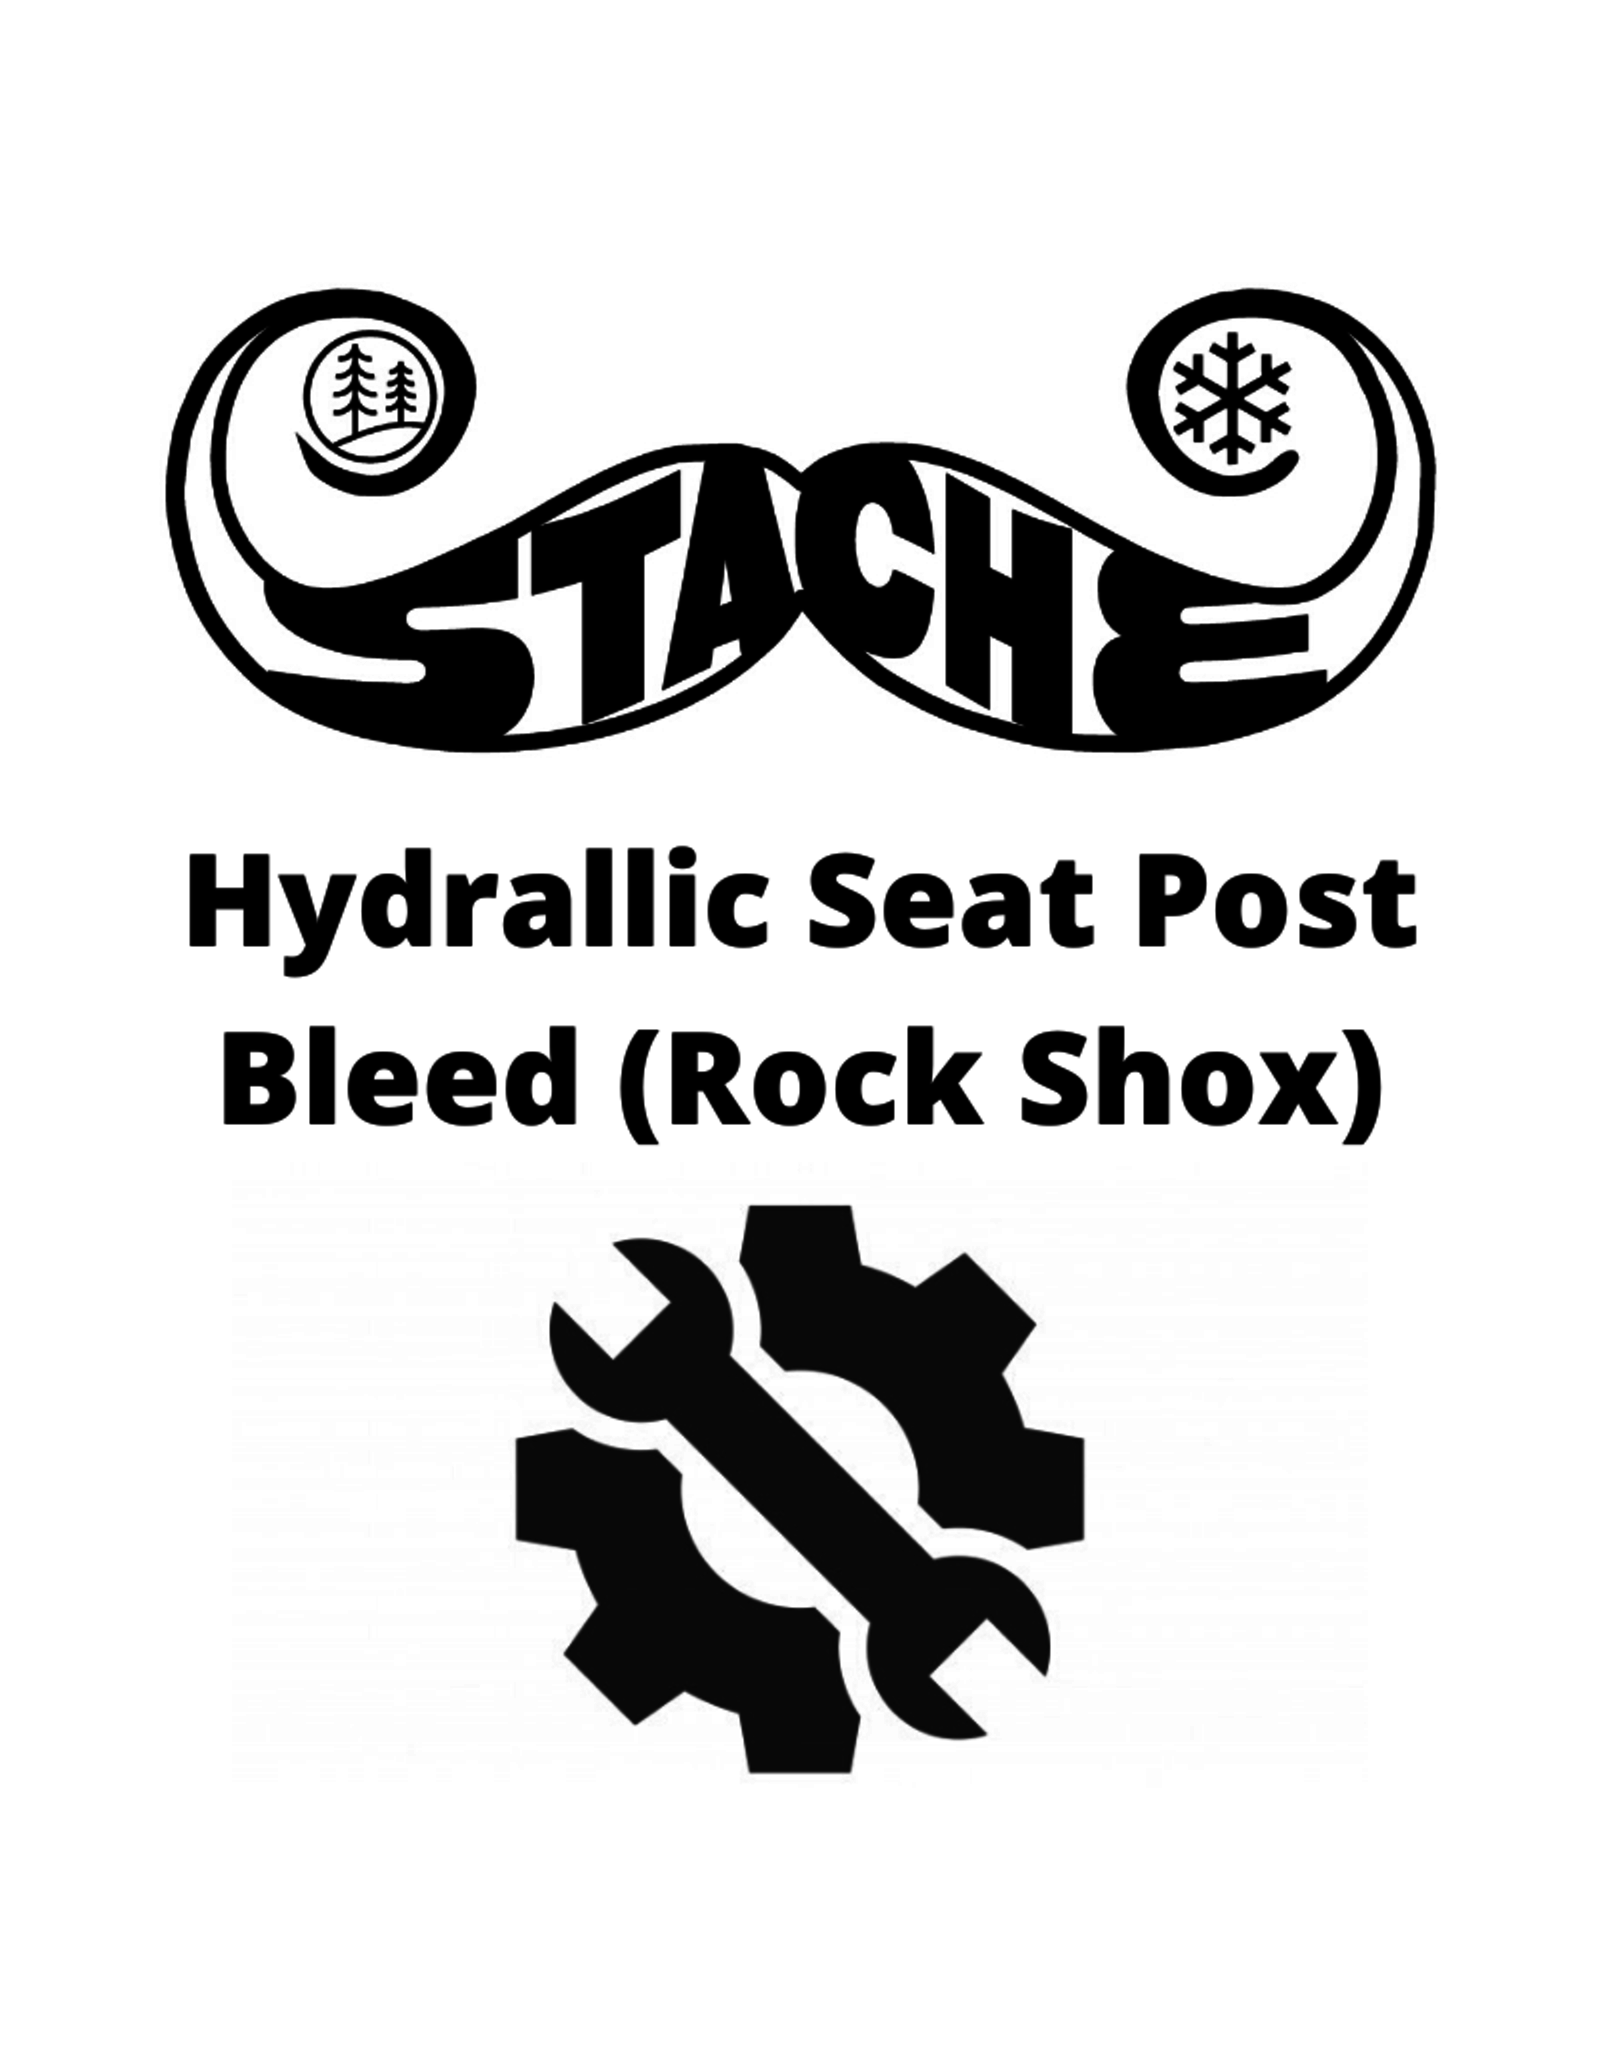 Hydrallic Seat Post Bleed (Rock Shox)